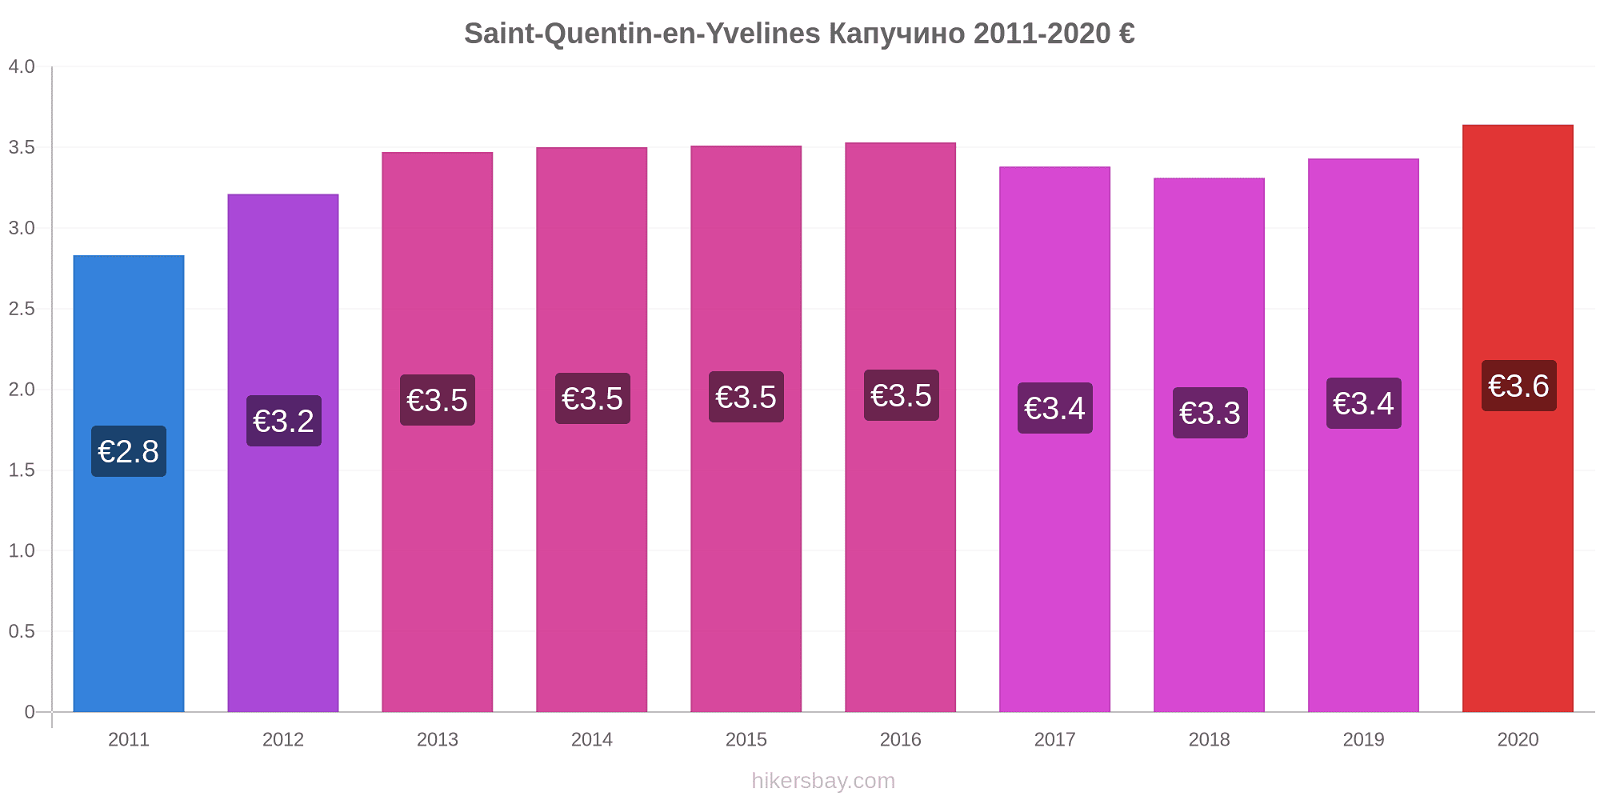 Saint-Quentin-en-Yvelines зміни цін Капучино hikersbay.com